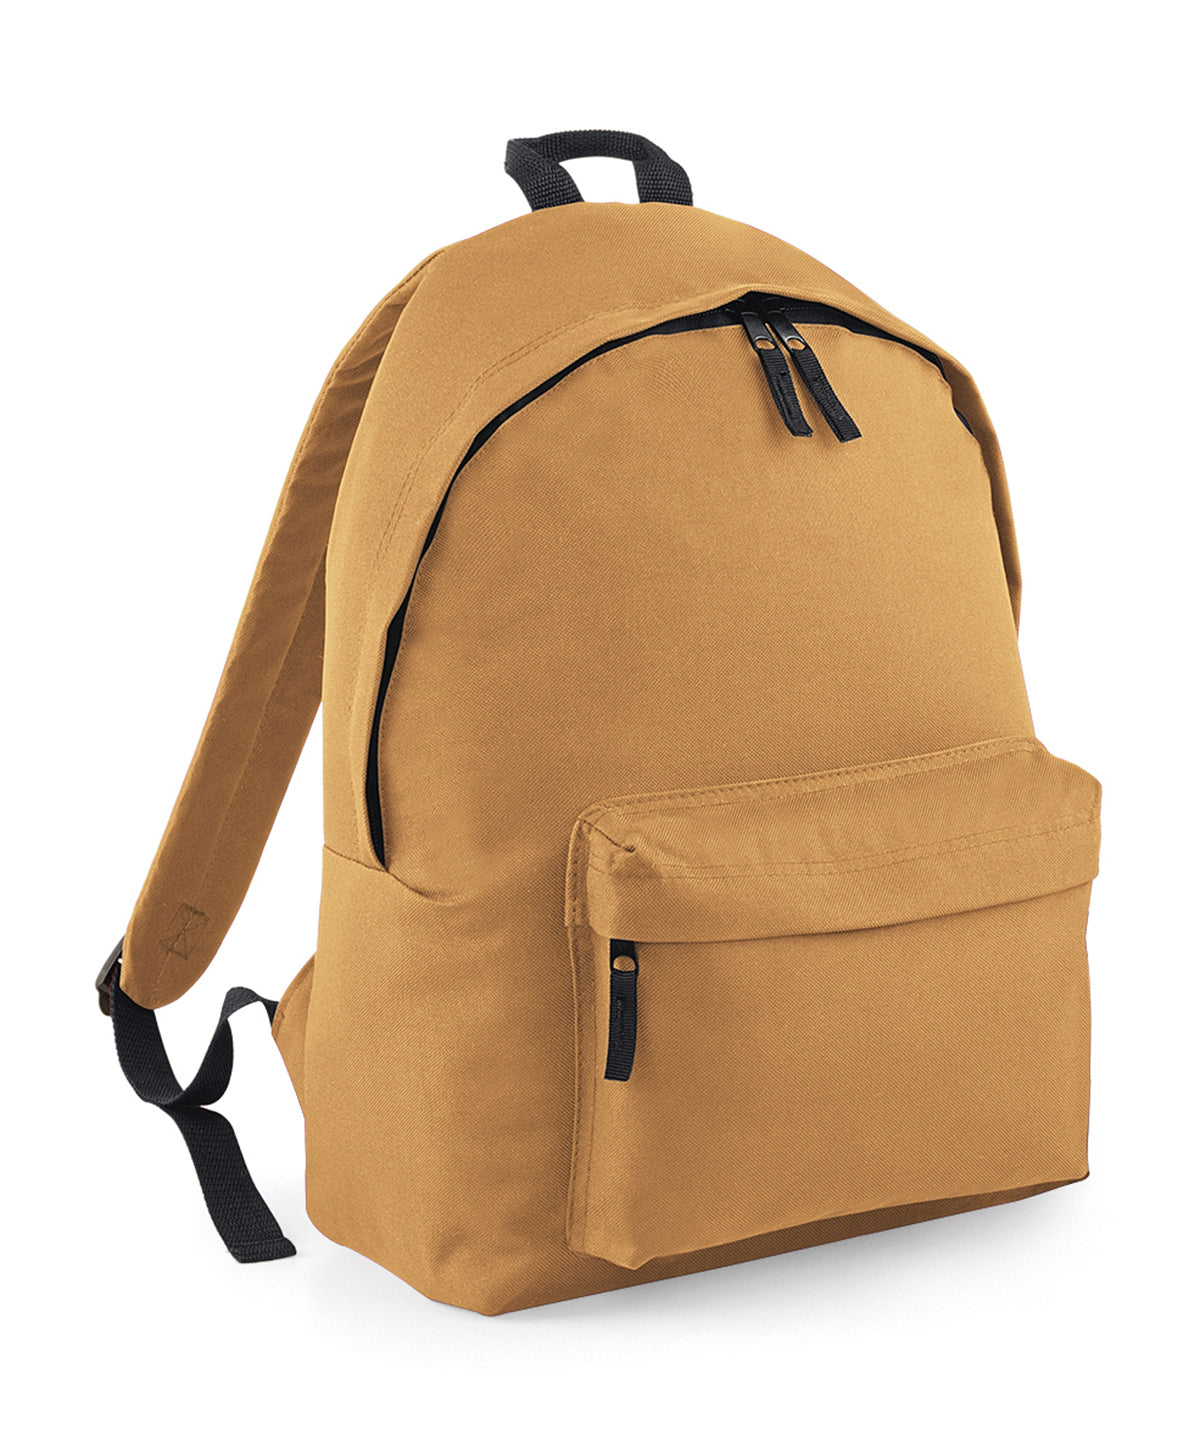 Personalised Bags - Light Brown Bagbase Original fashion backpack